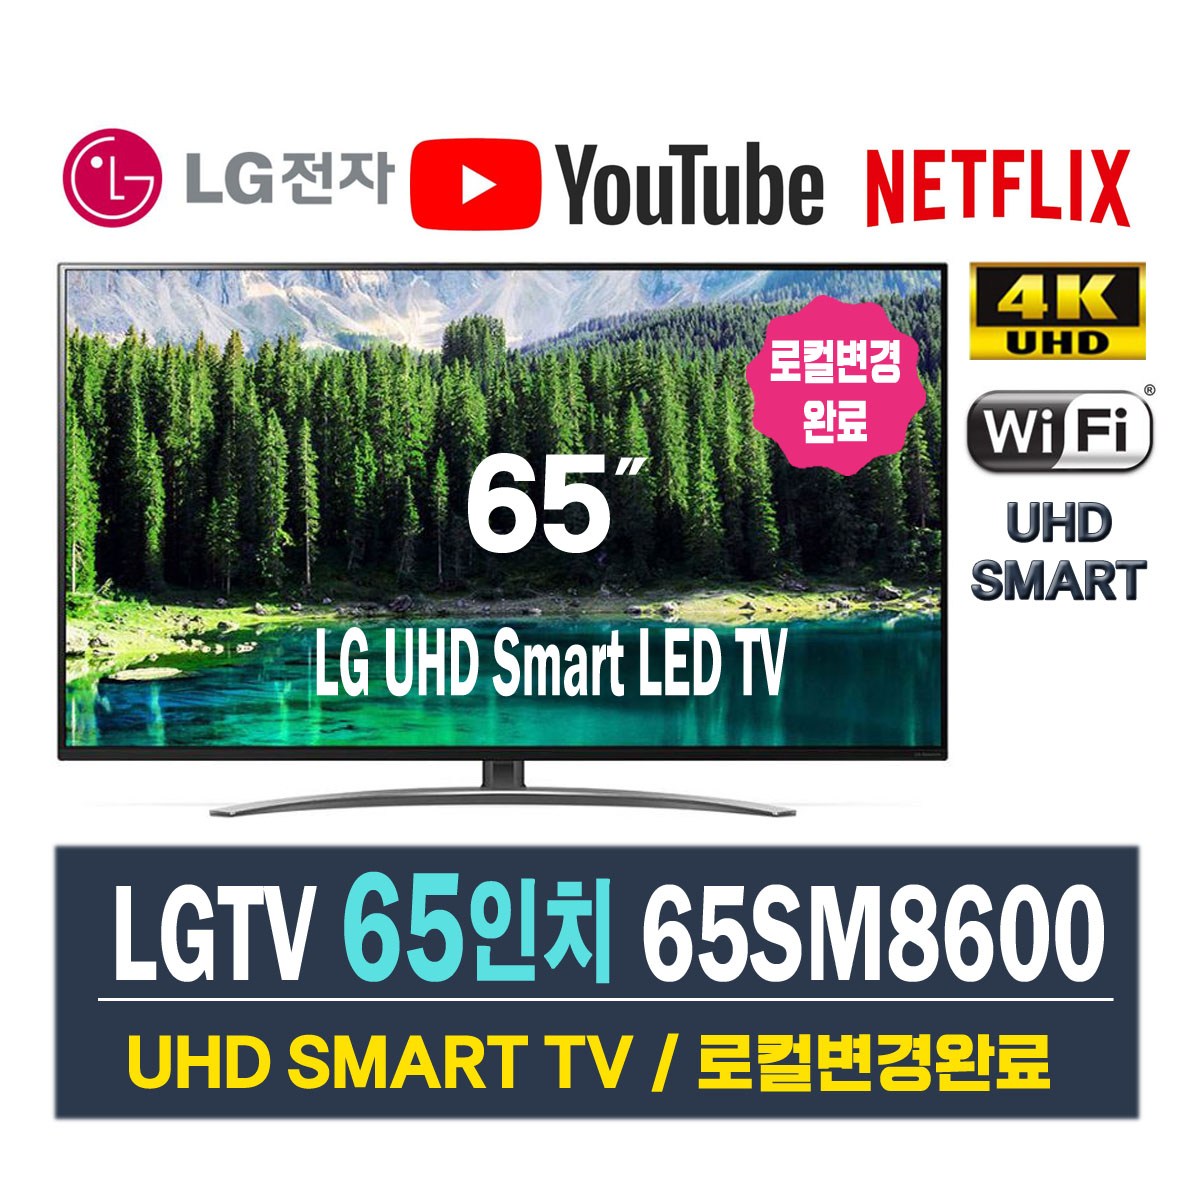 LG전자 스마트TV 65인치 리퍼 슈퍼UHD 65SM8600 (2019년식), 3~5일 후 배송일정 안내, 지방 벽걸이설치비포함 